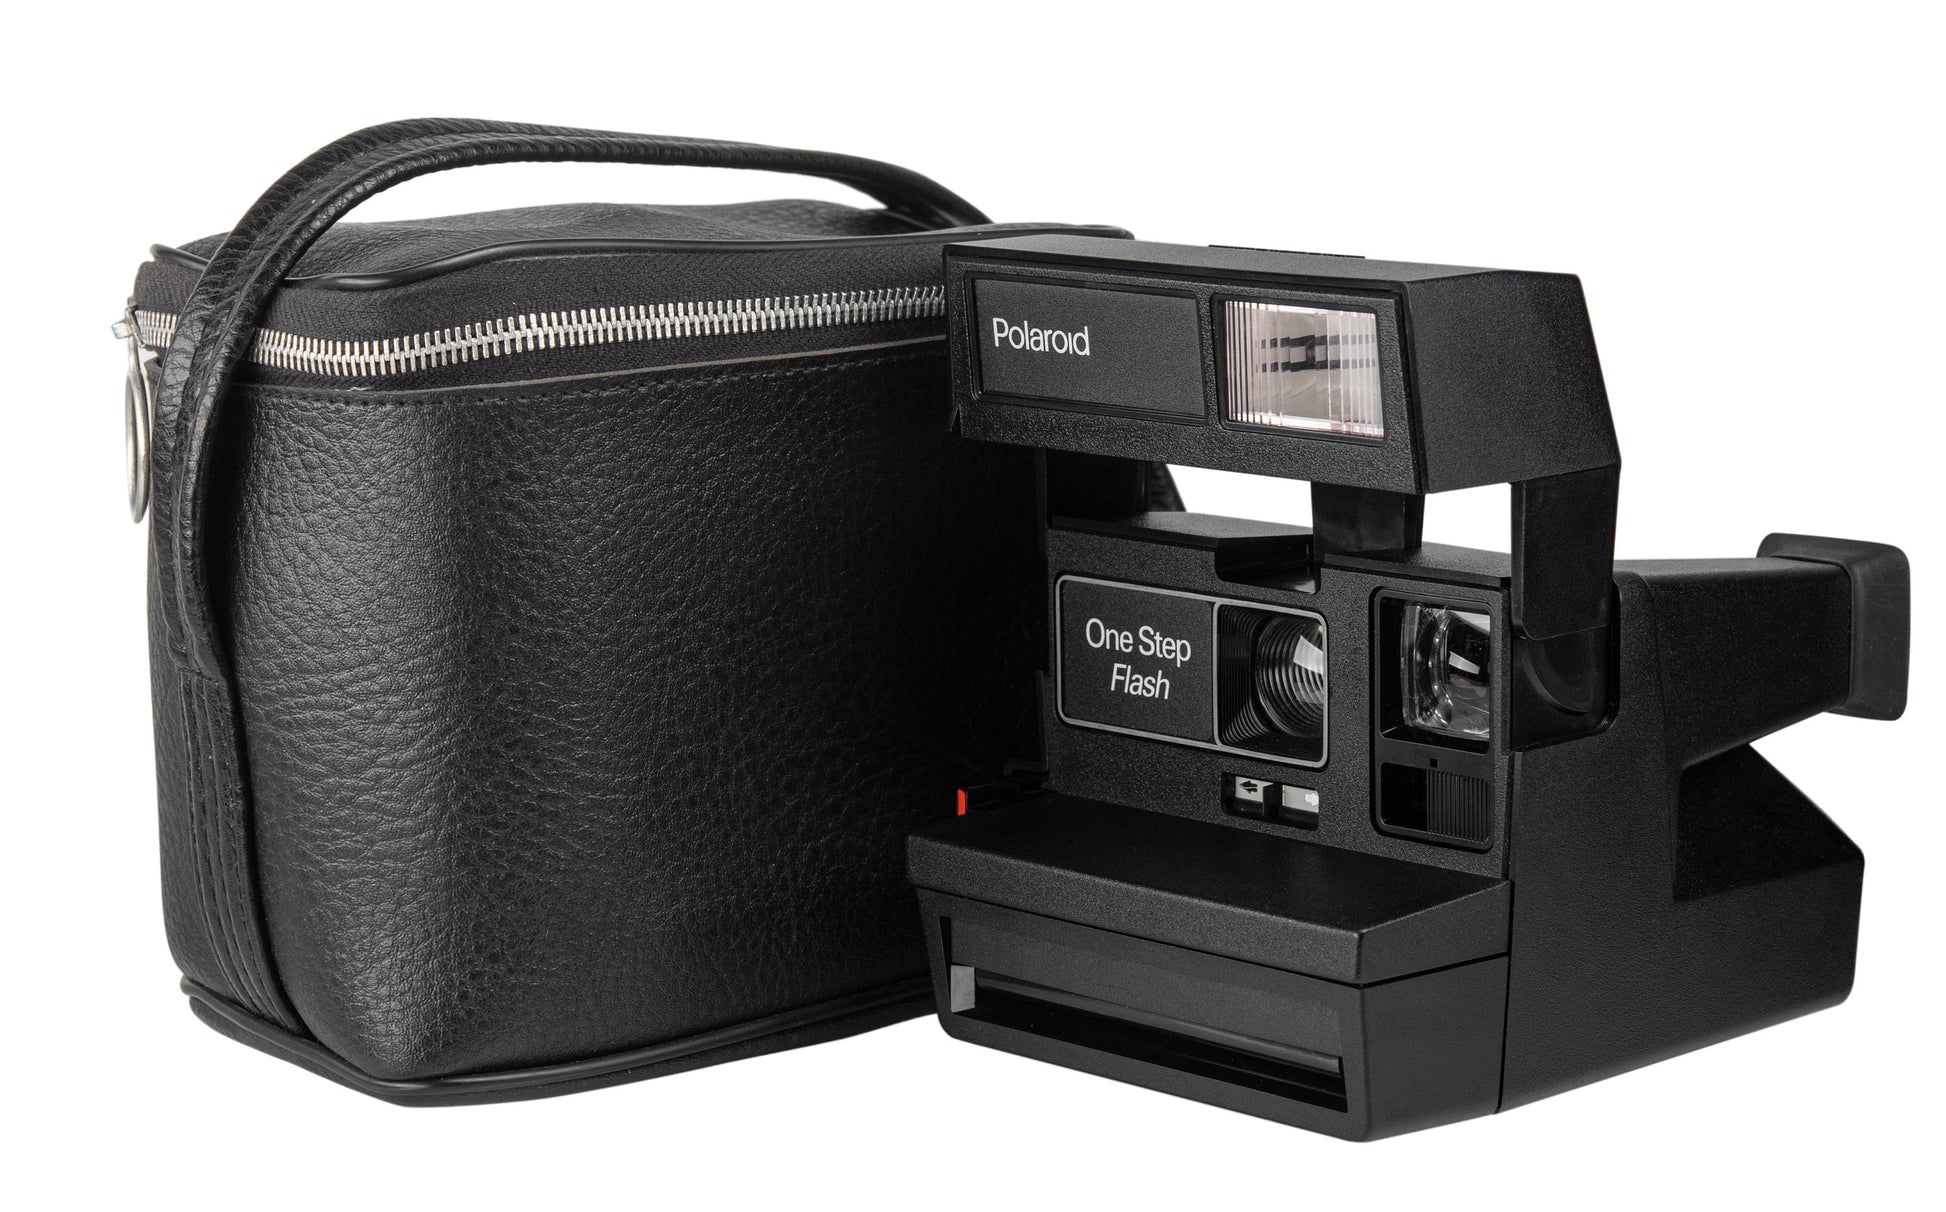 Black Polaroid Camera Bag, Original POLAROID - BAG NR 322 - Vintage Polaroid Instant Cameras